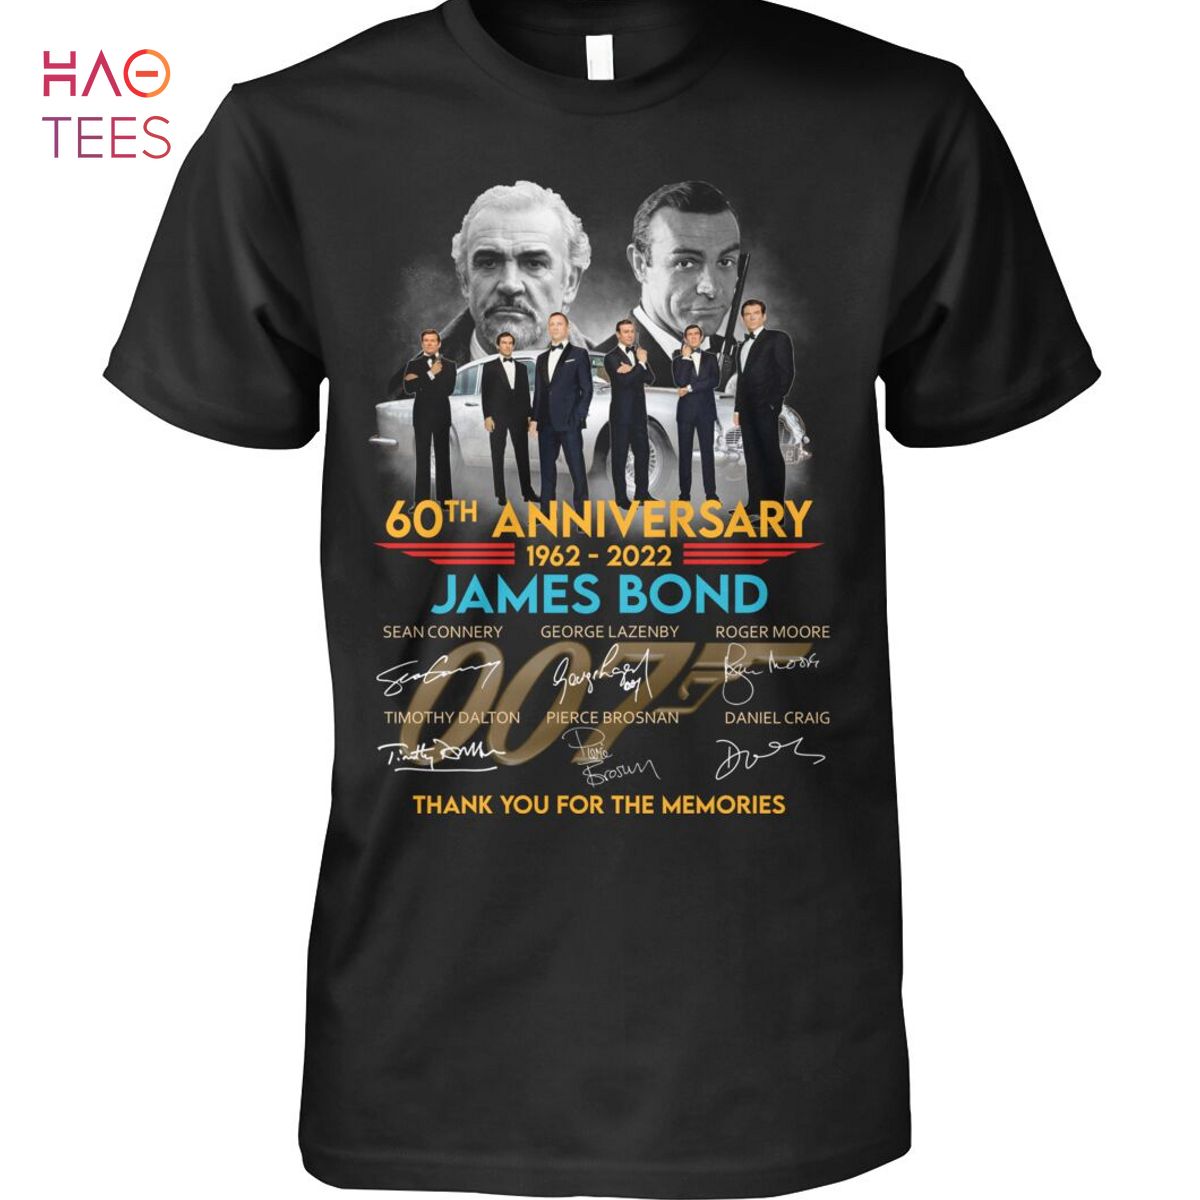 60 Anniversary 1962-2022 James Bond Shirt